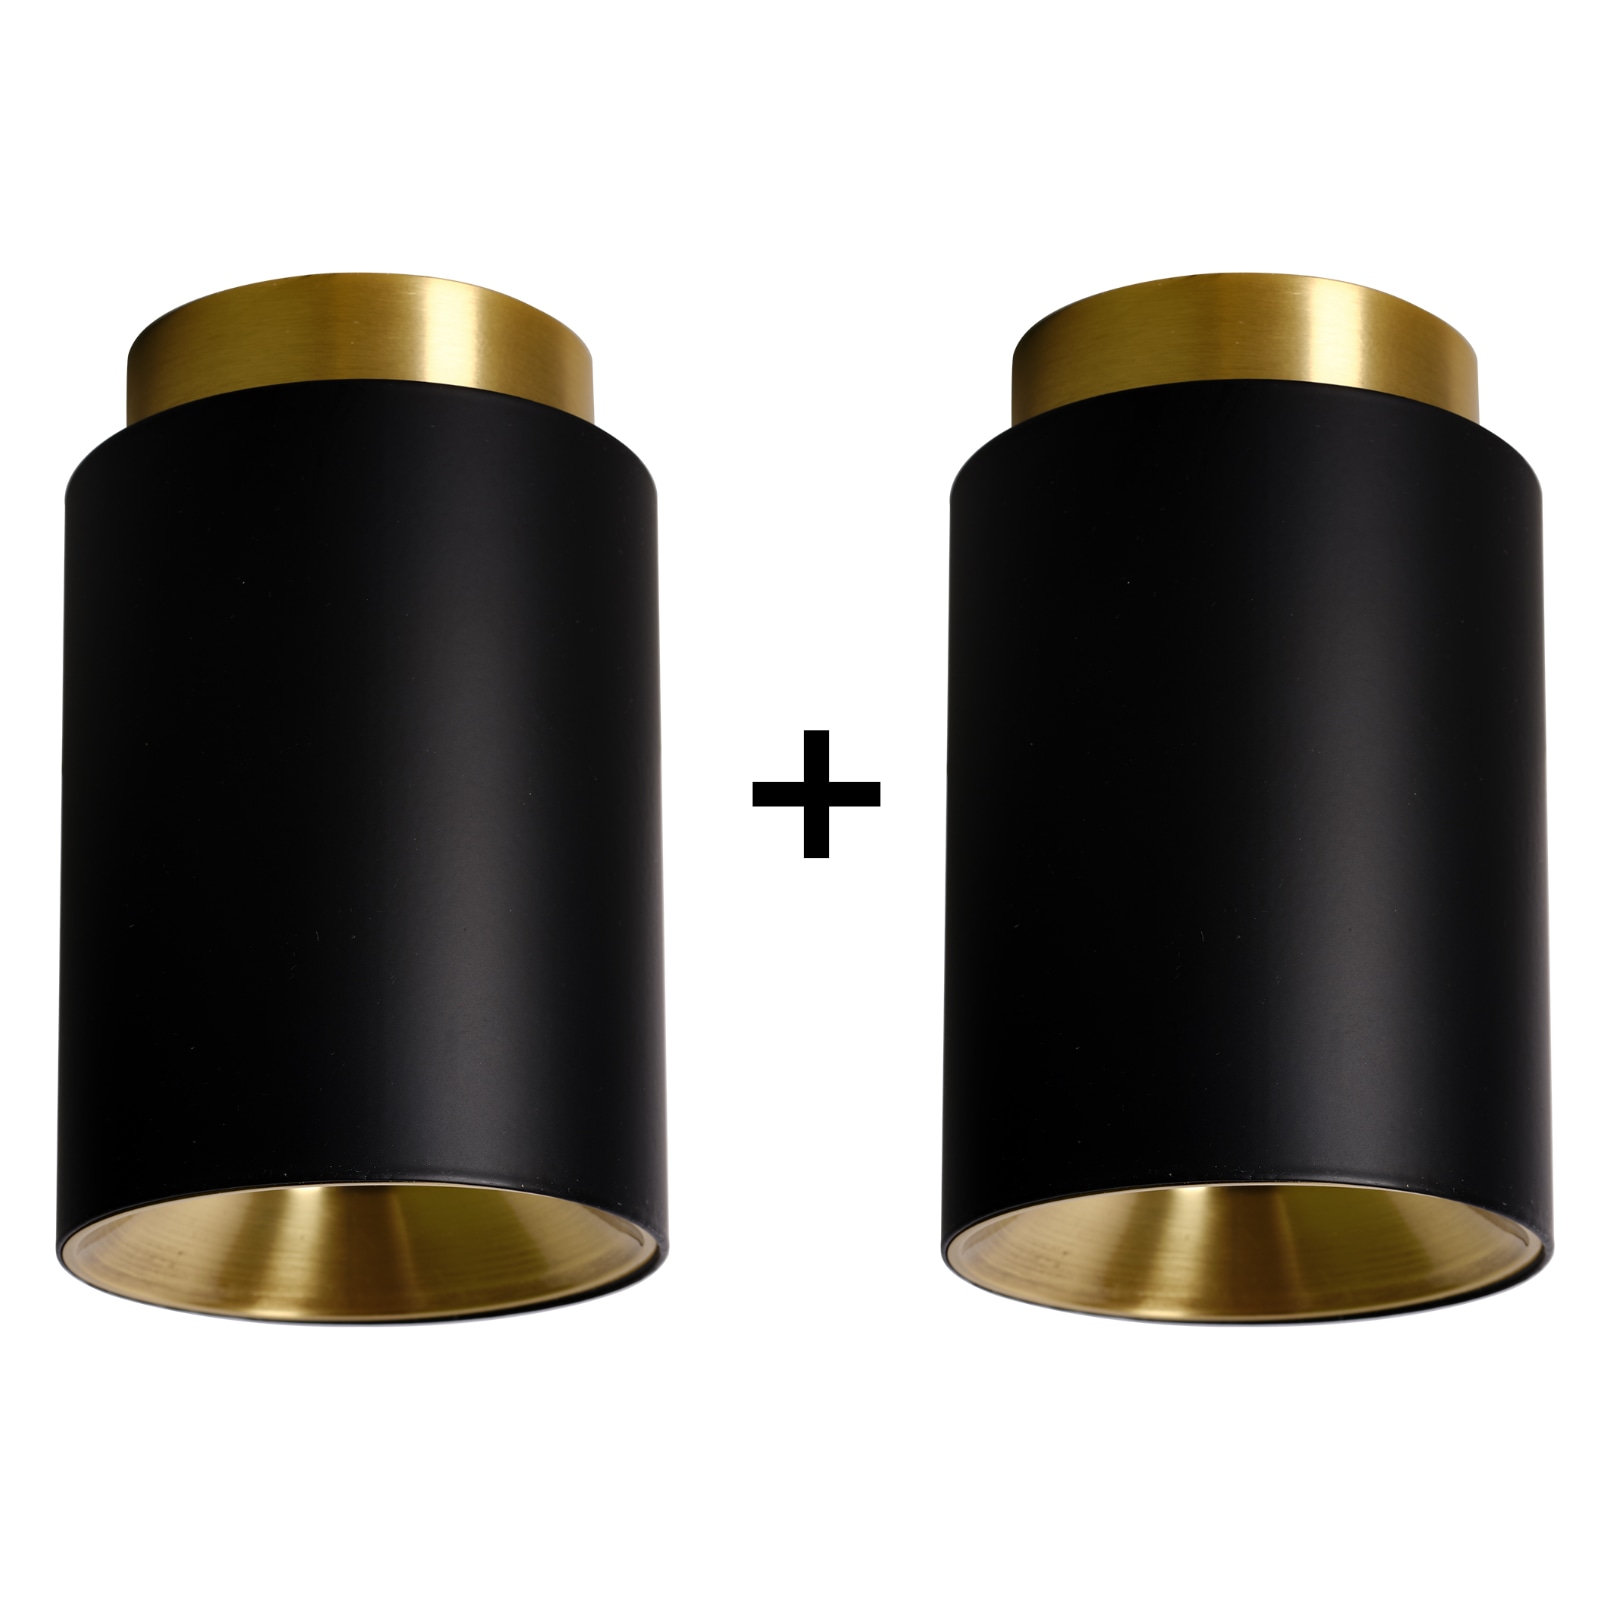 Discount: 2 x TOBO C85 Ceiling Spotlights: Zwei schwarze Spots zum günstigen Preis.